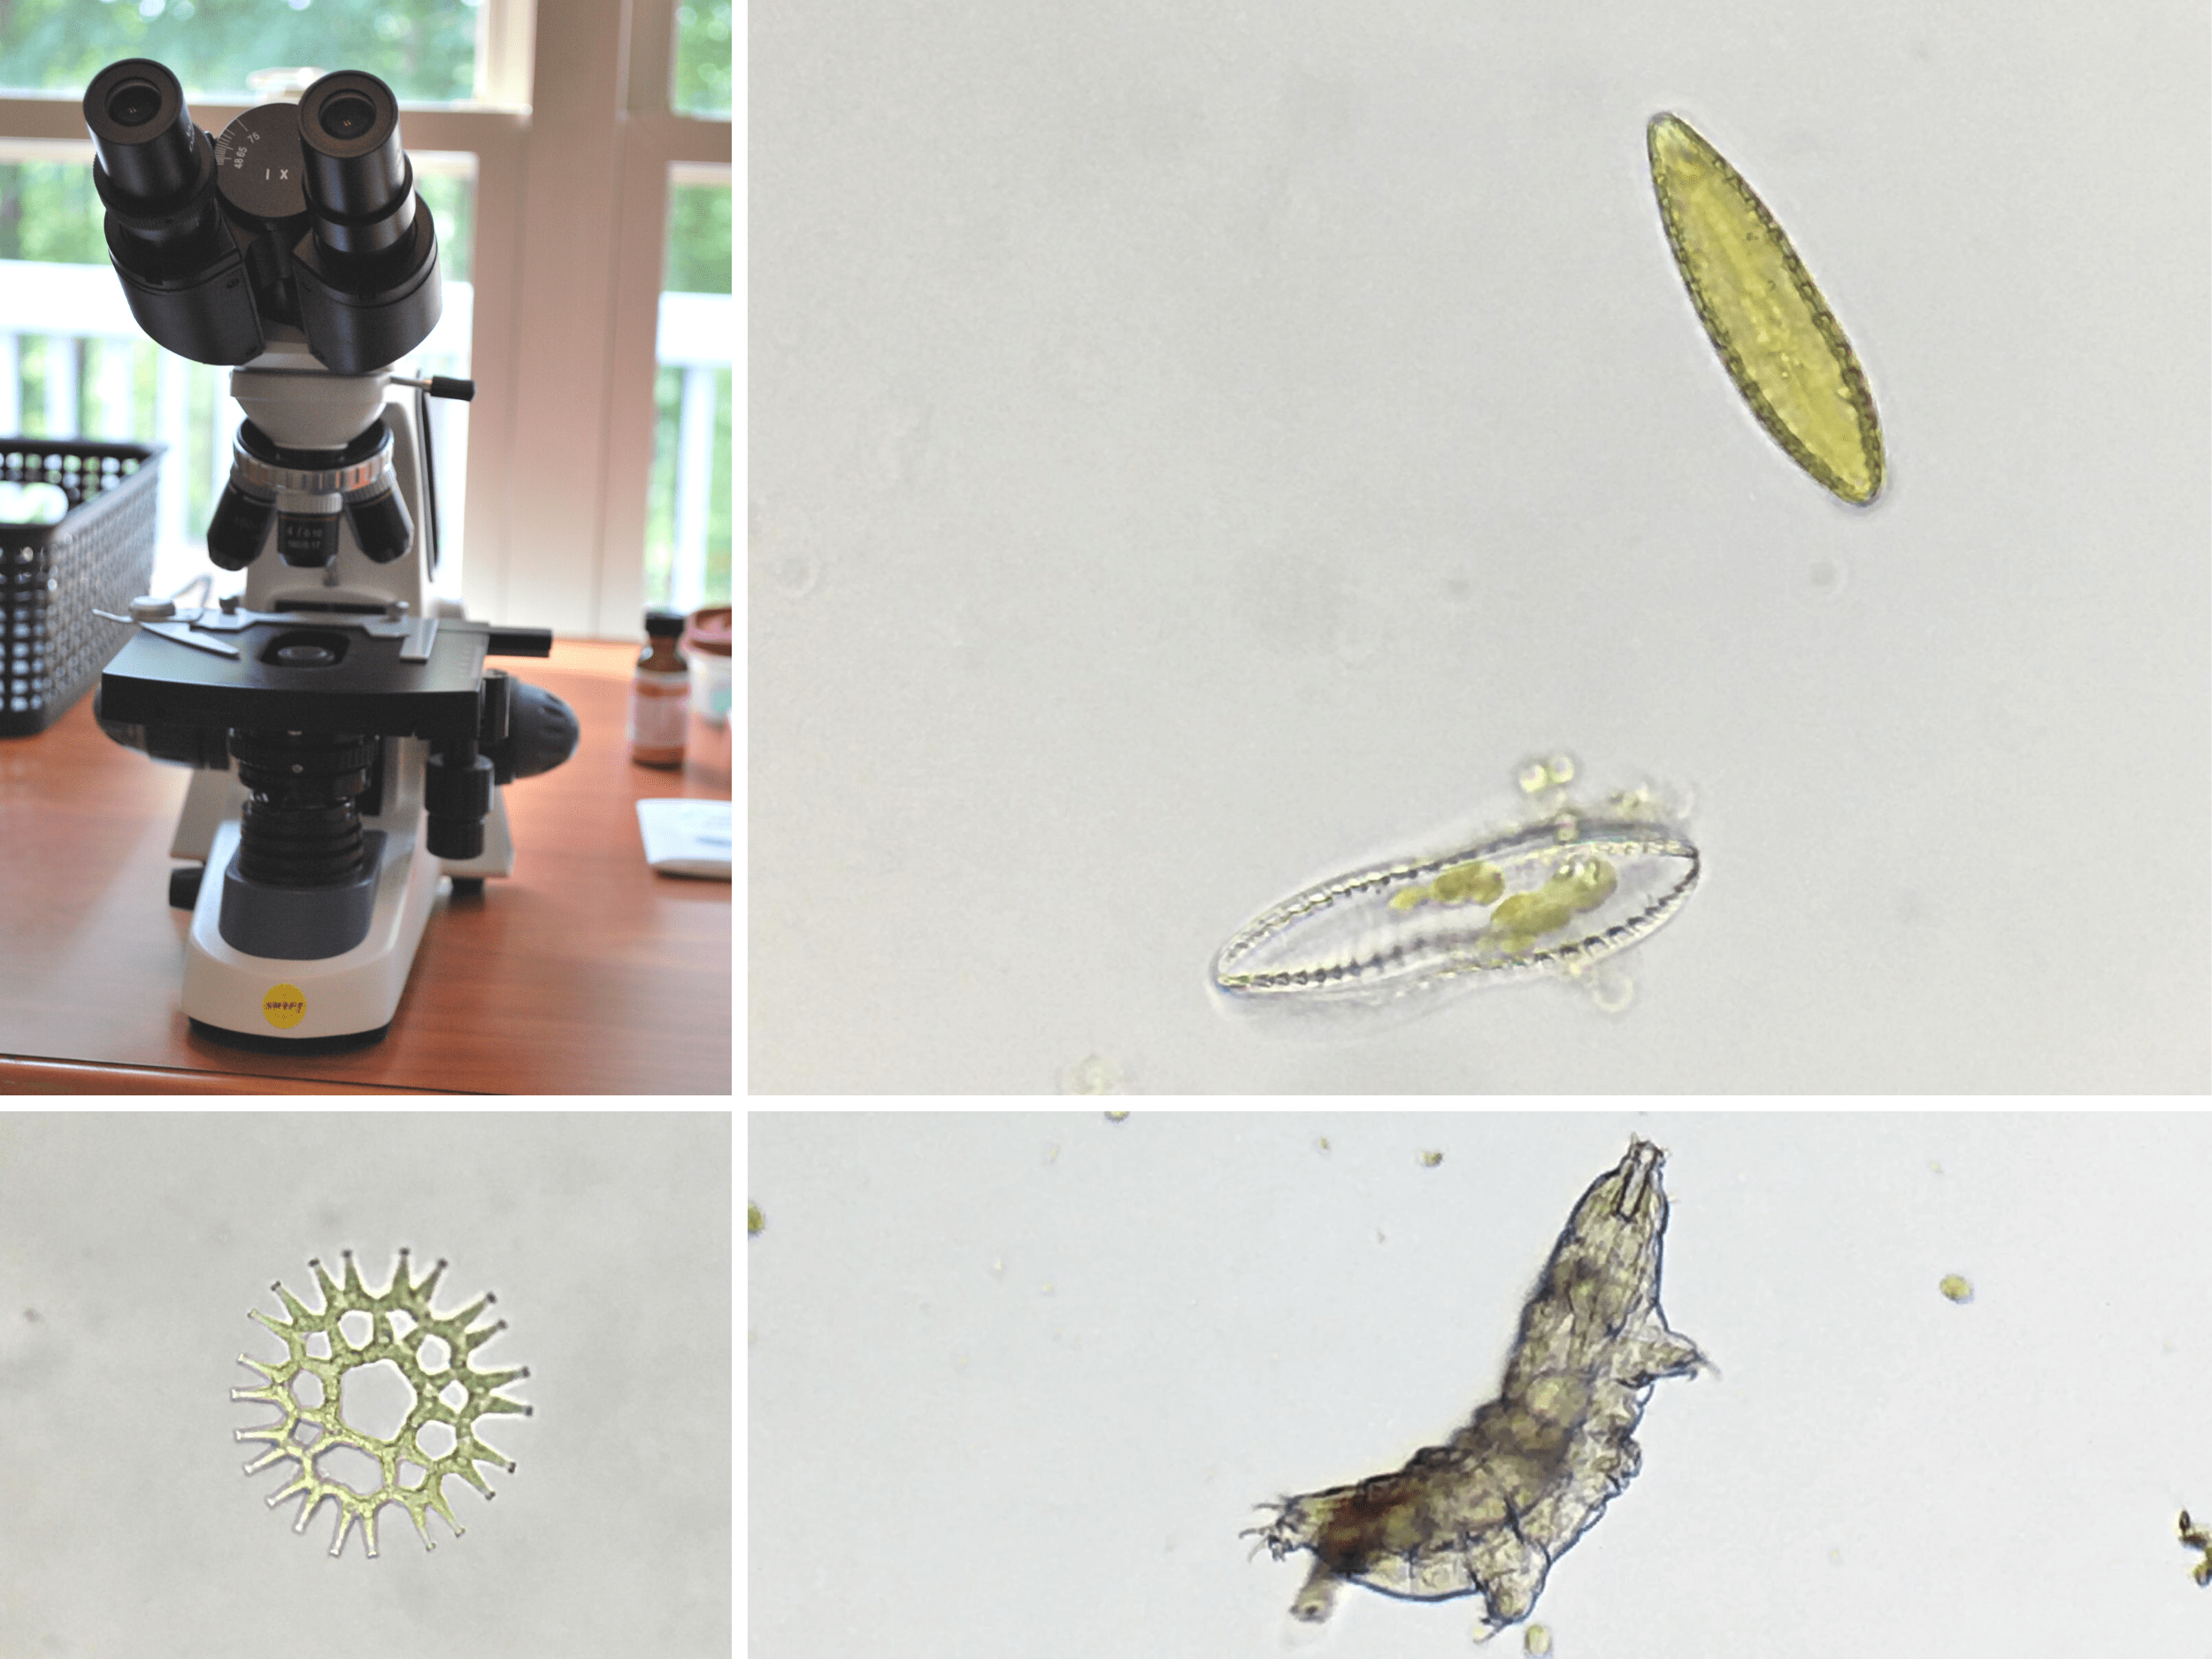 microorganisms in pond water under microscope